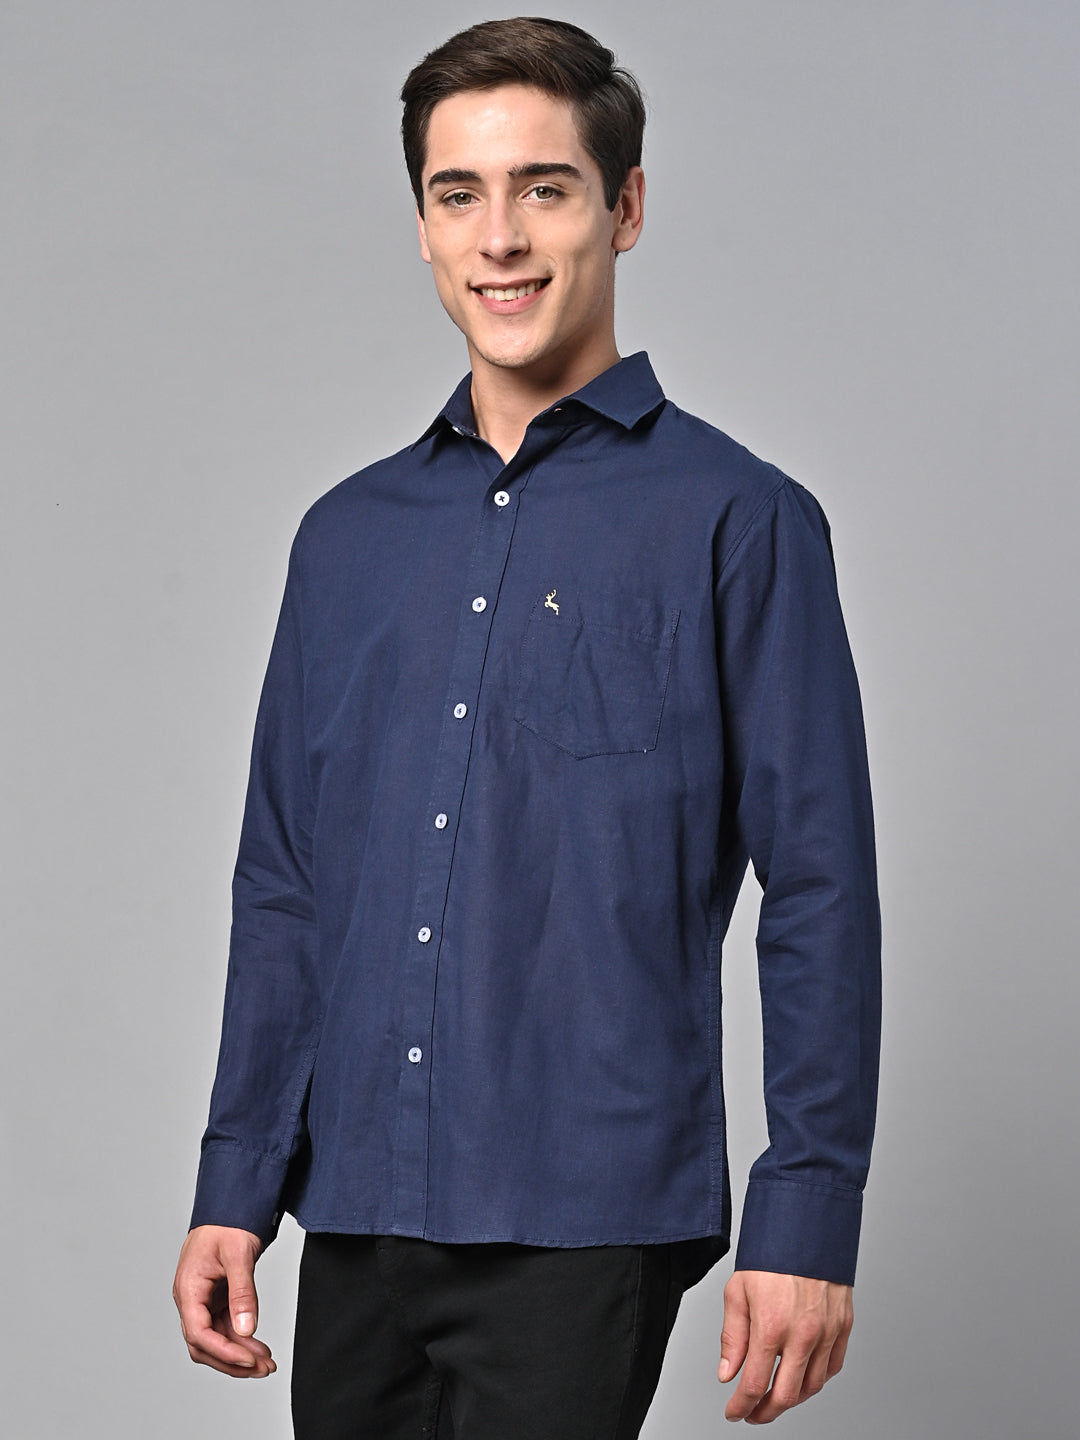 Valbone Men's Solid Blue Printed Linen Casual Shirt